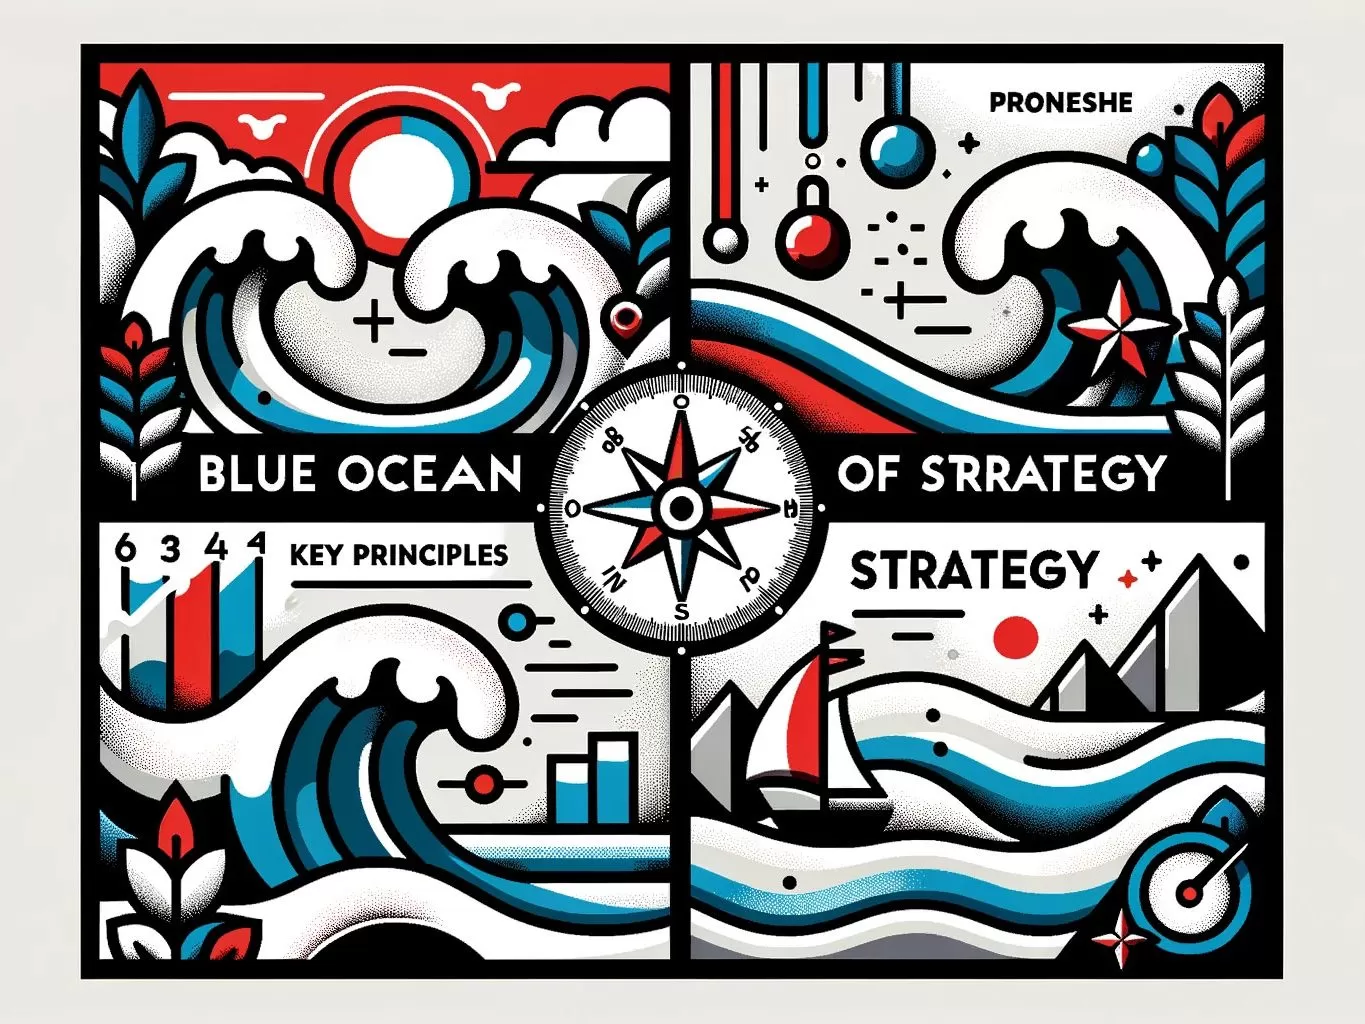 Key Principles of Blue Ocean Strategy